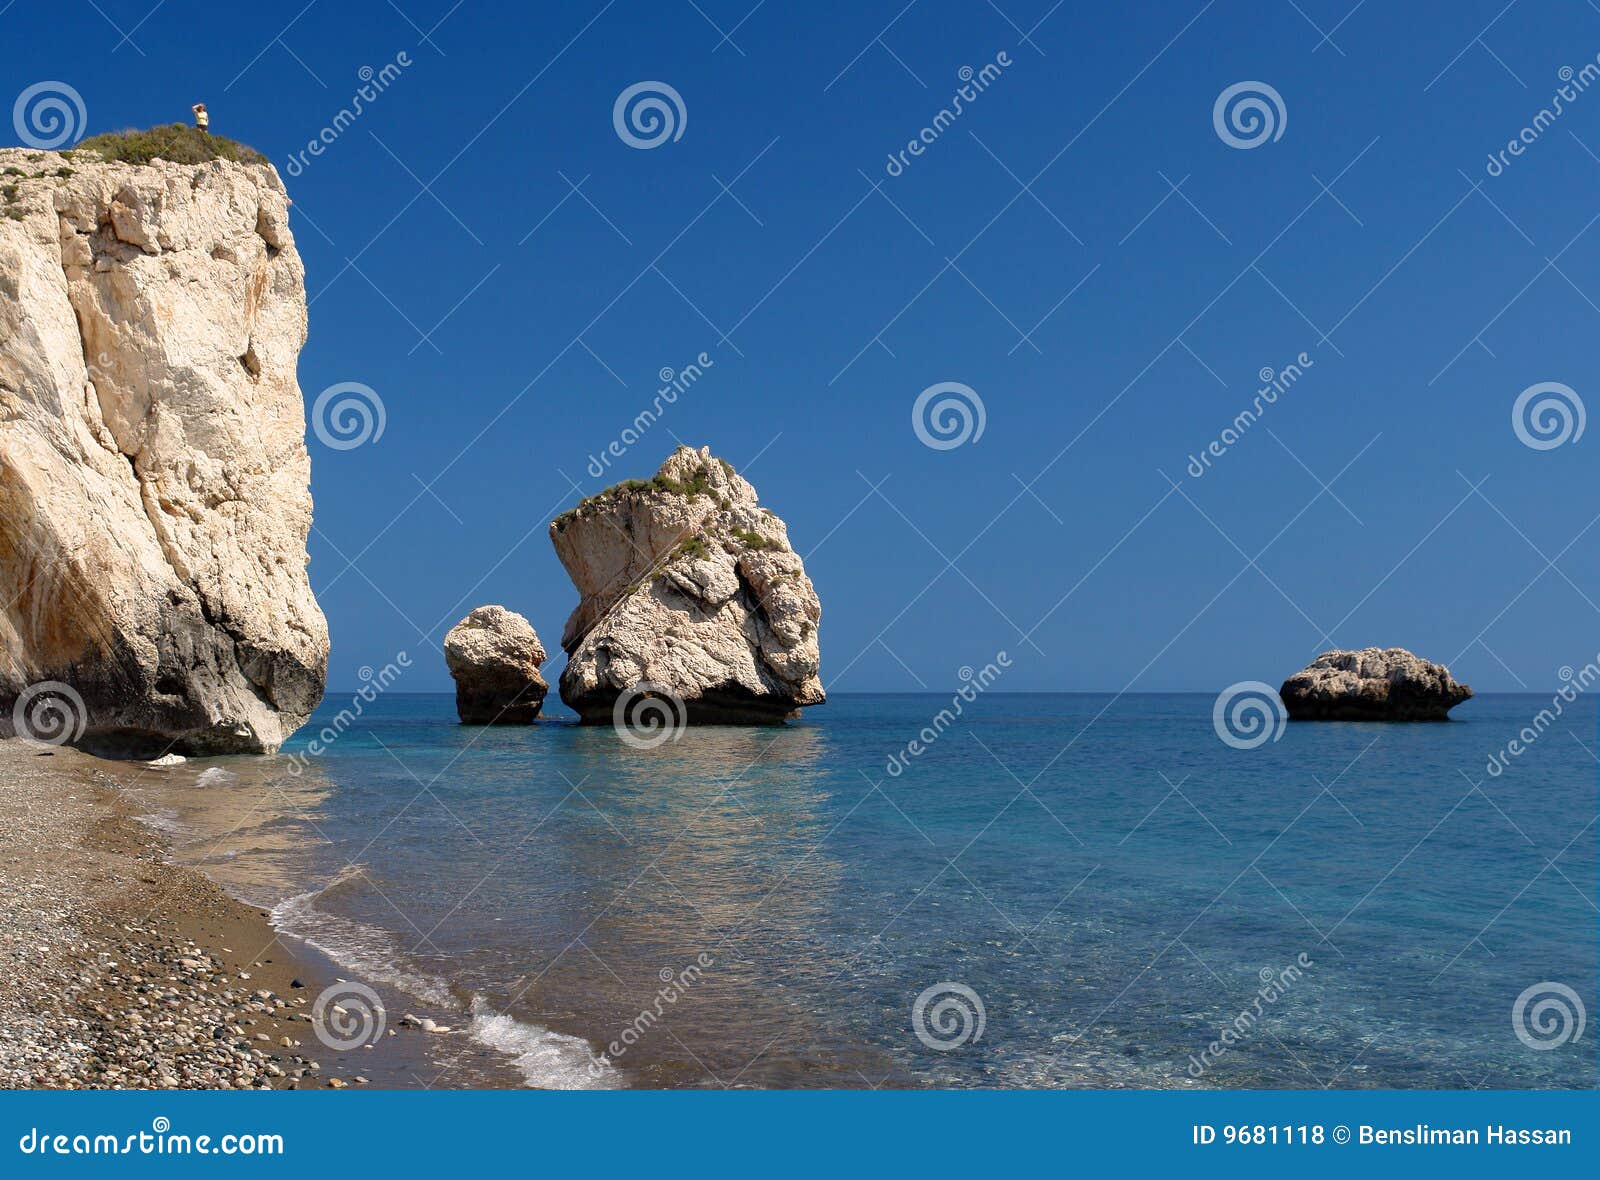 cyprus, aphrodite beach